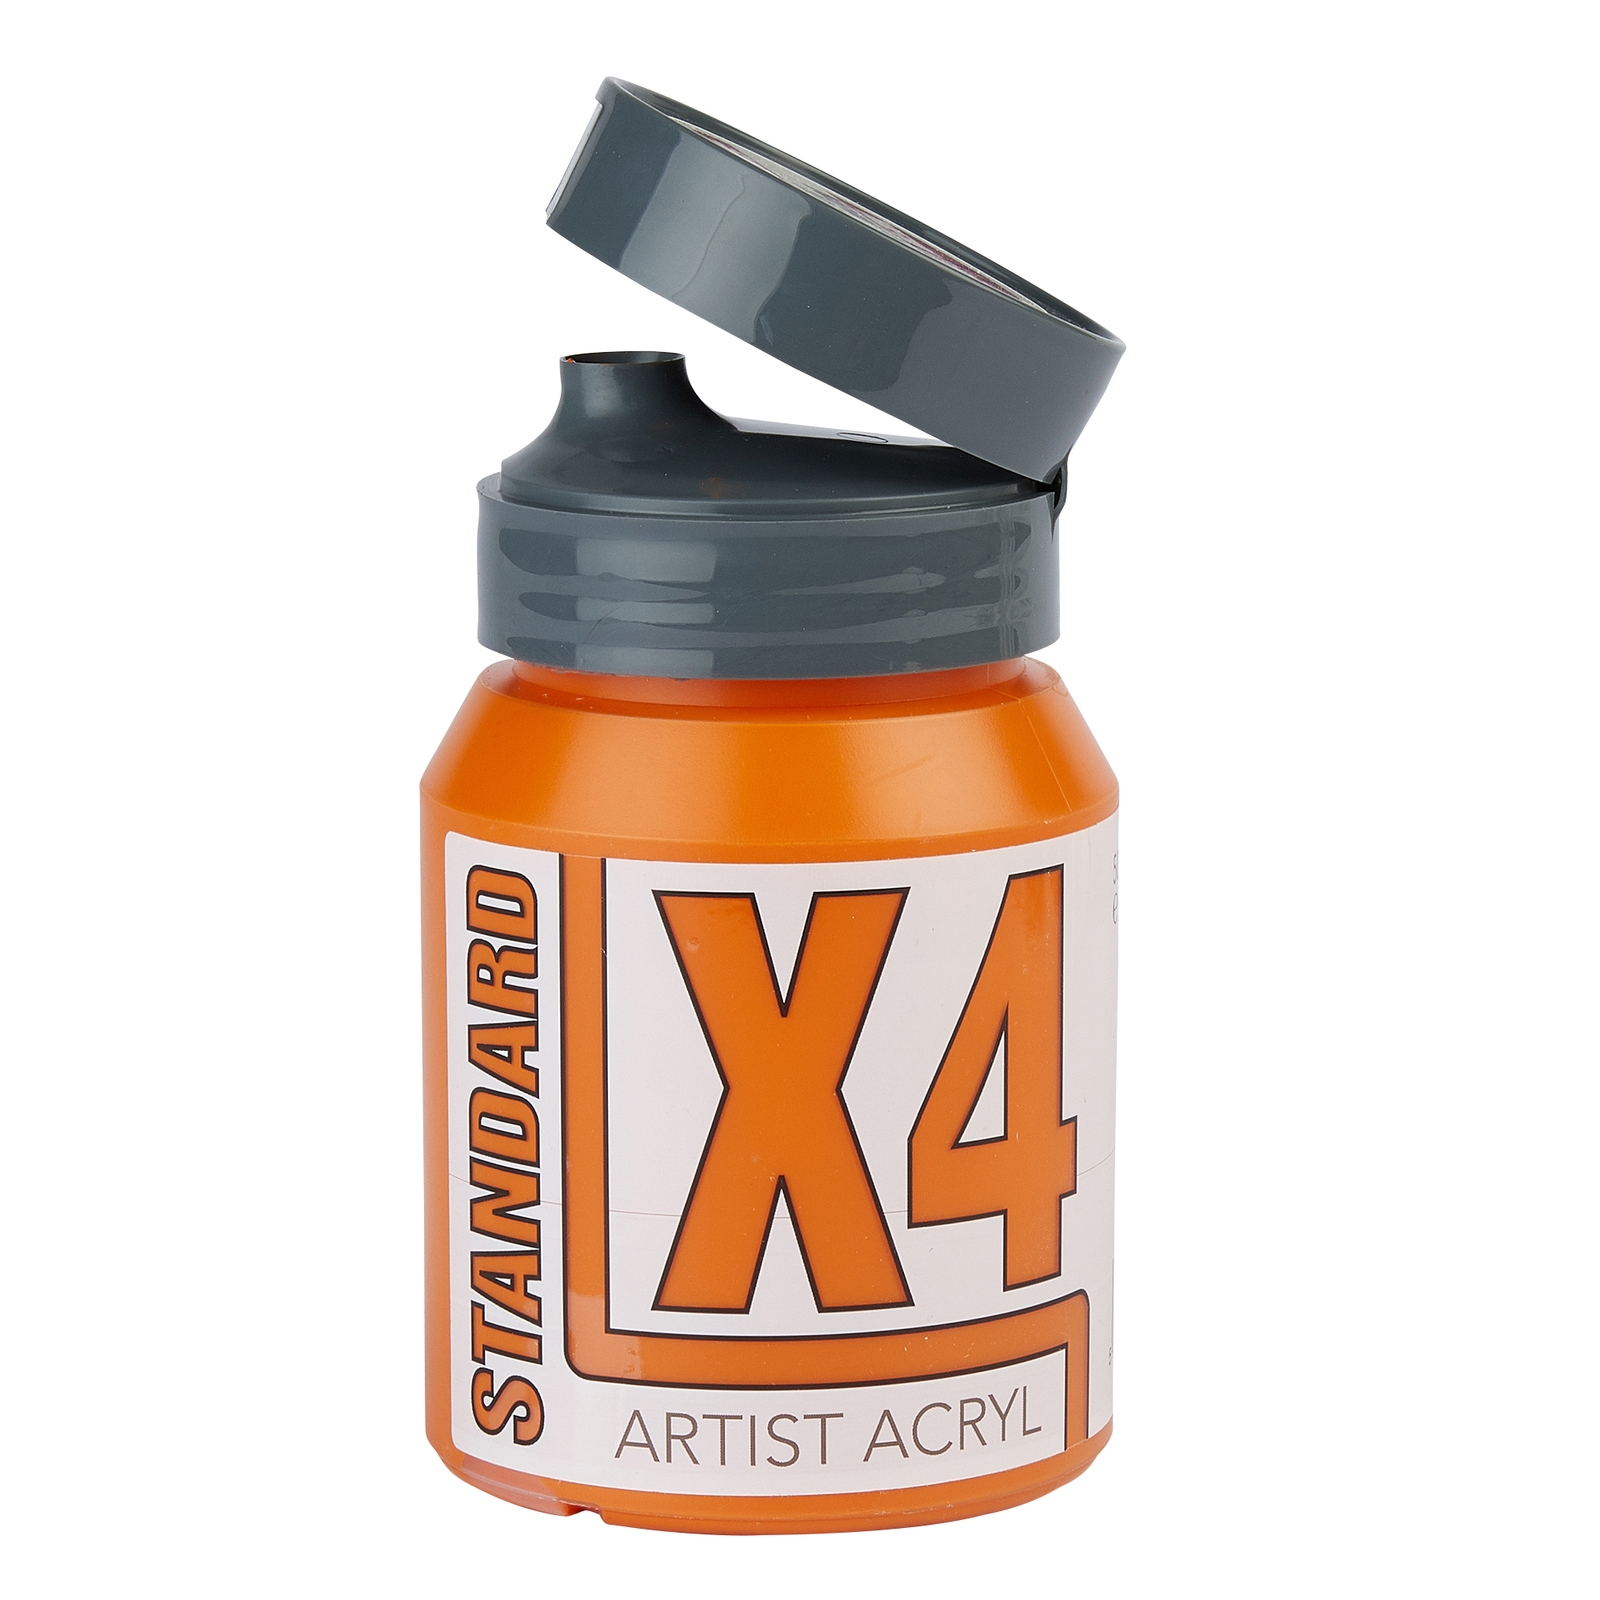 Specialist Crafts X4 Standard Cadmium Orange Hue Acryl/Acrylic Paint - 500ml - Each